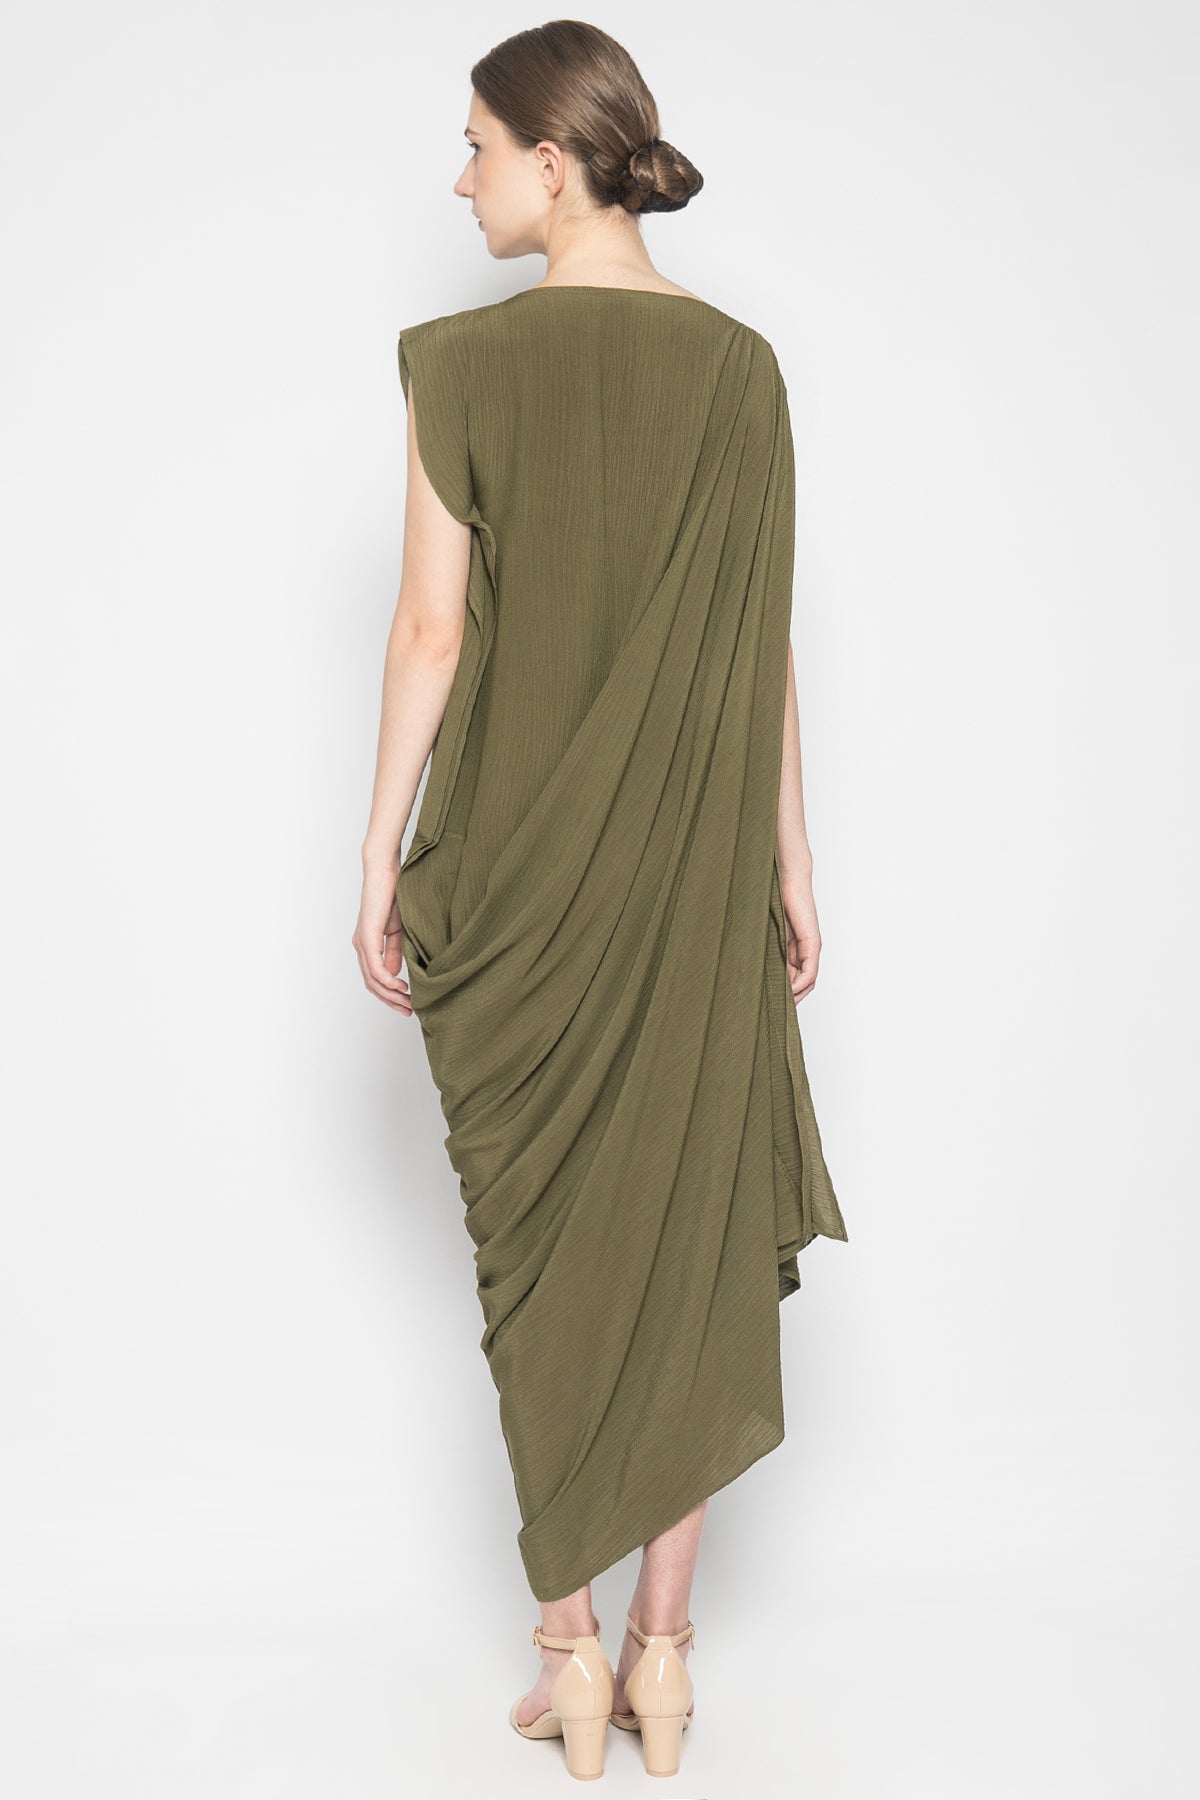 Venus Dress in Olive